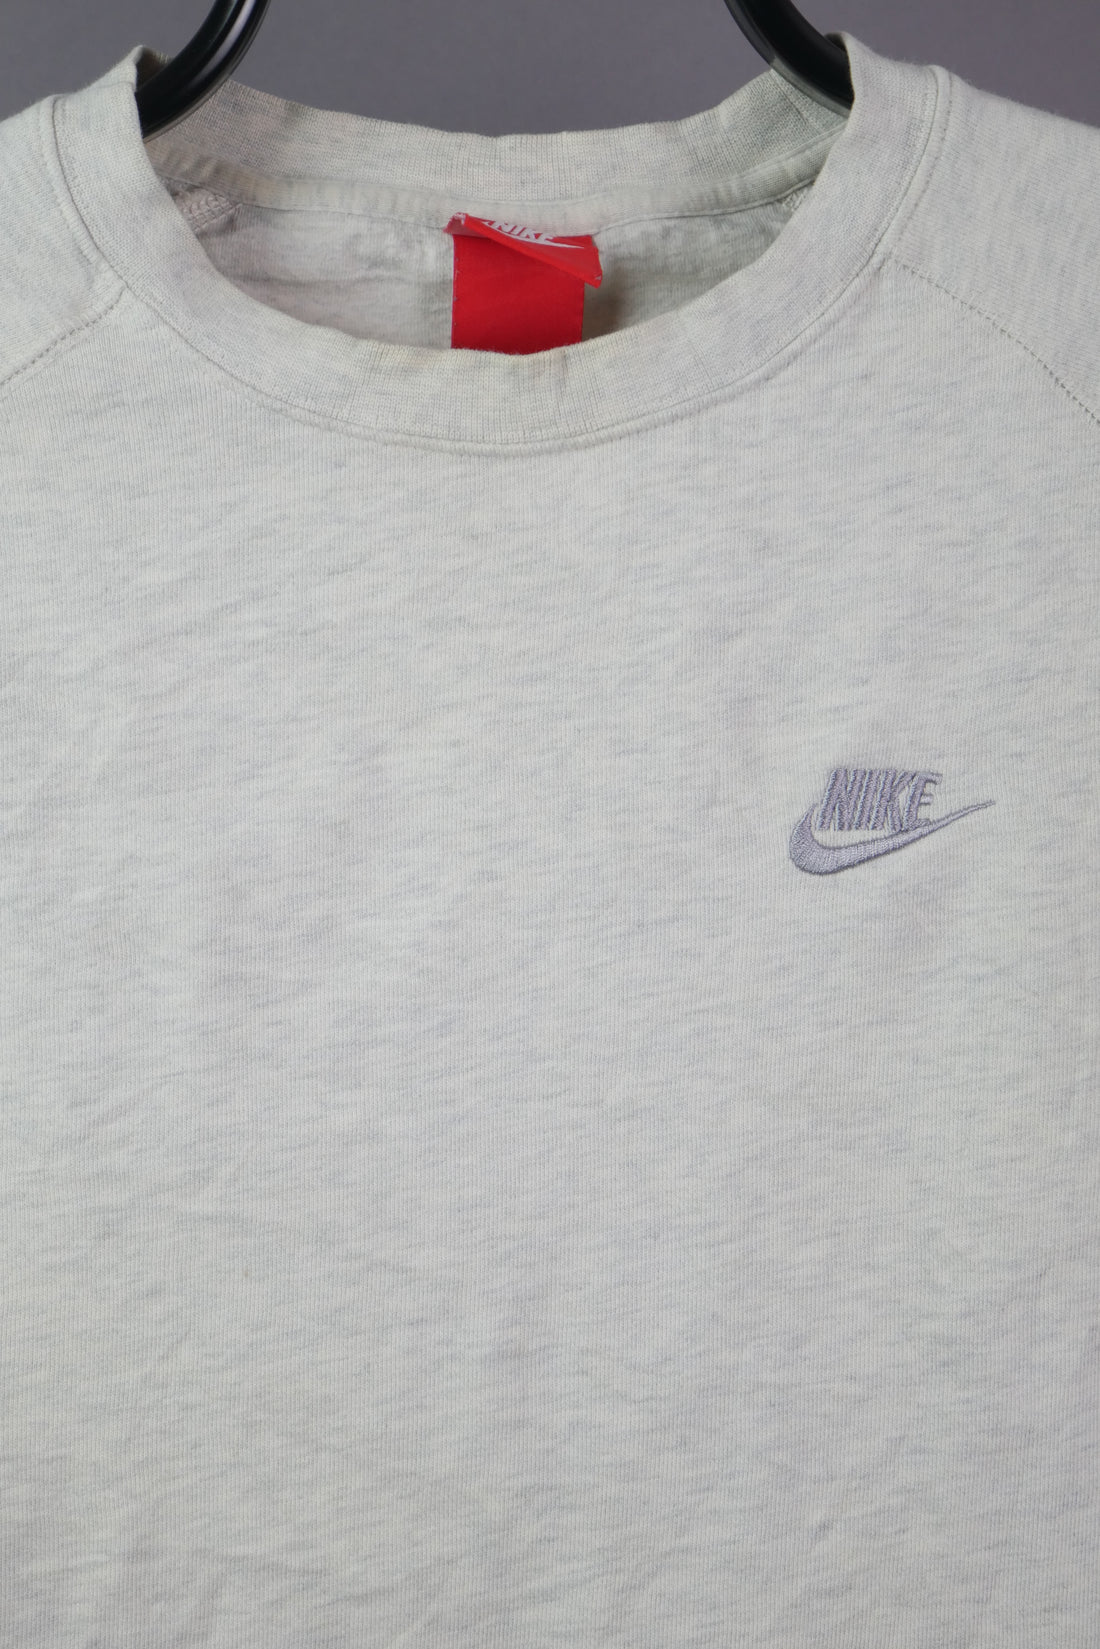 The Nike Sweatshirt (M)